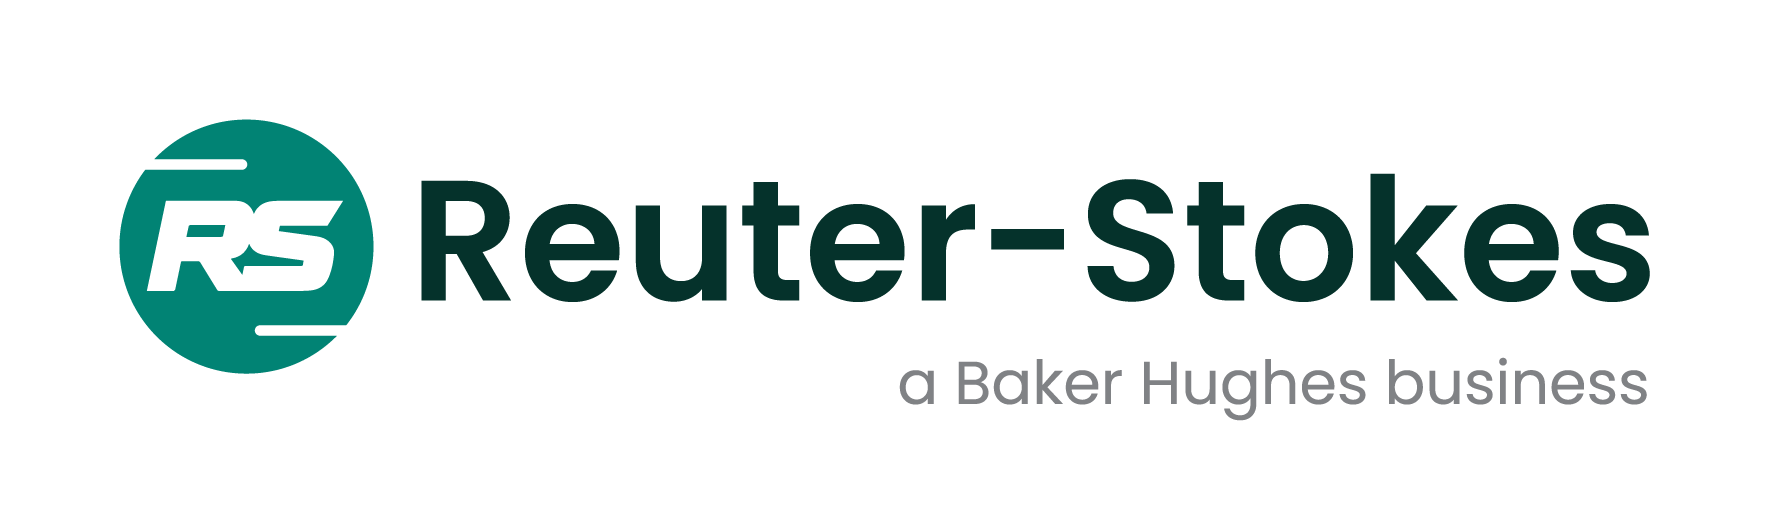 Reuter-Stokes, a Baker Hughes business Home